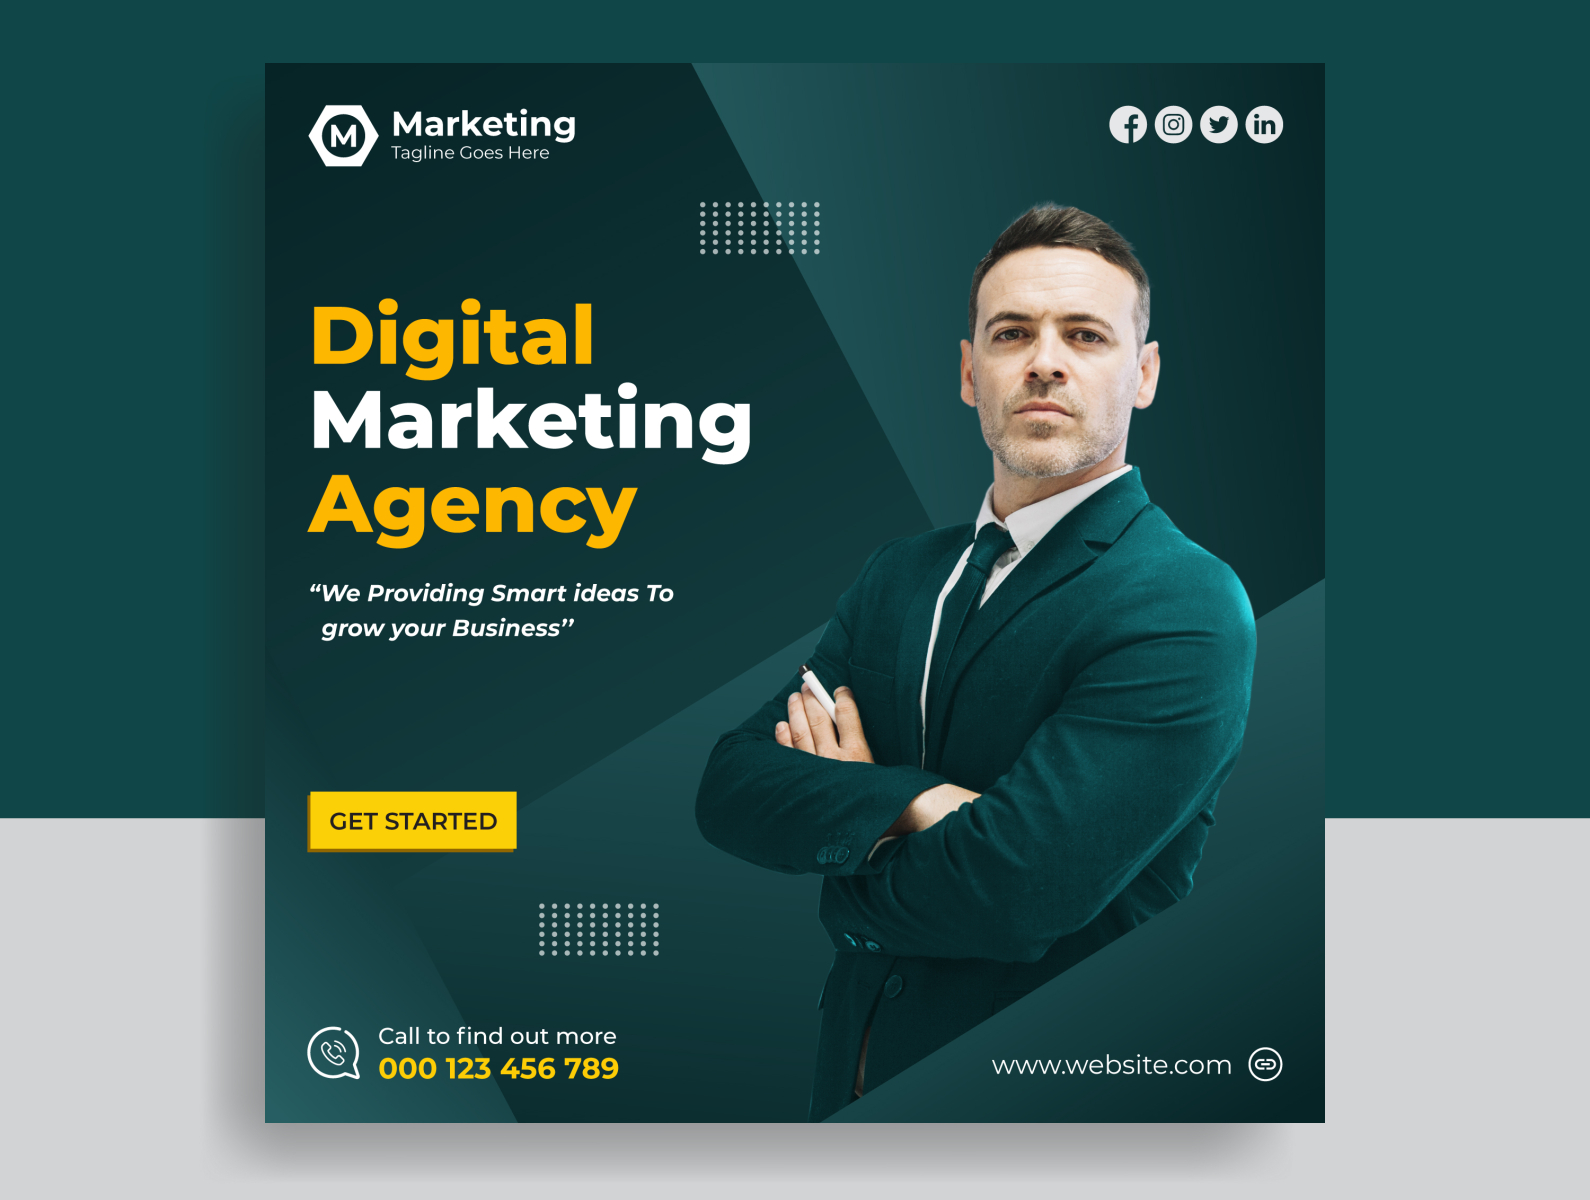 Corporate Digital Marketing Agency Social Media Post Design By Md Miraz